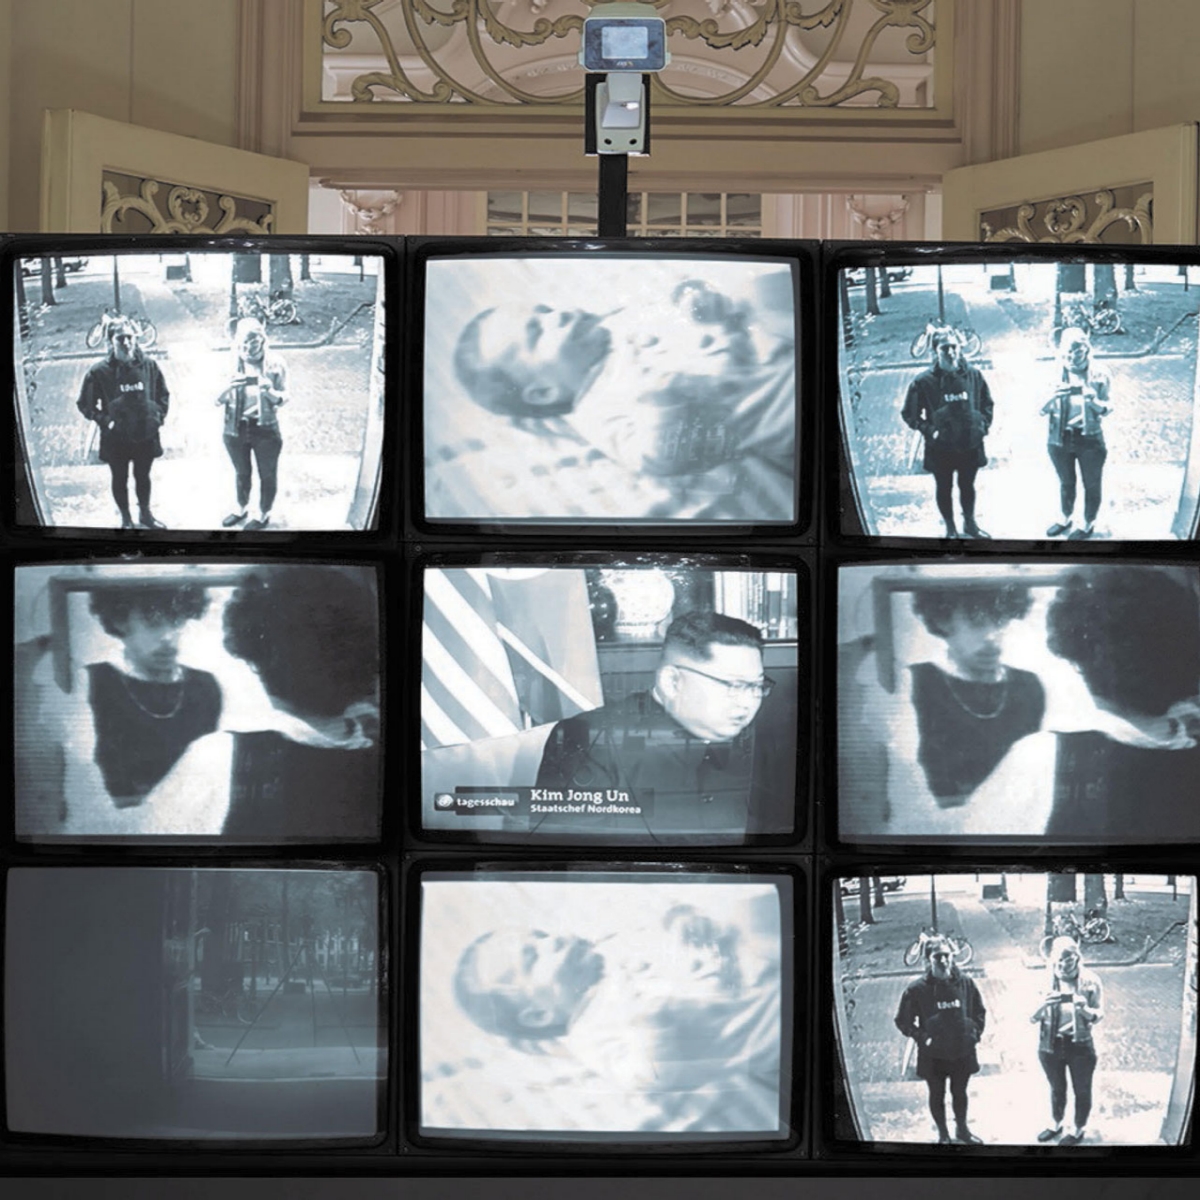 image of multiple CCTV screens depicting people. 